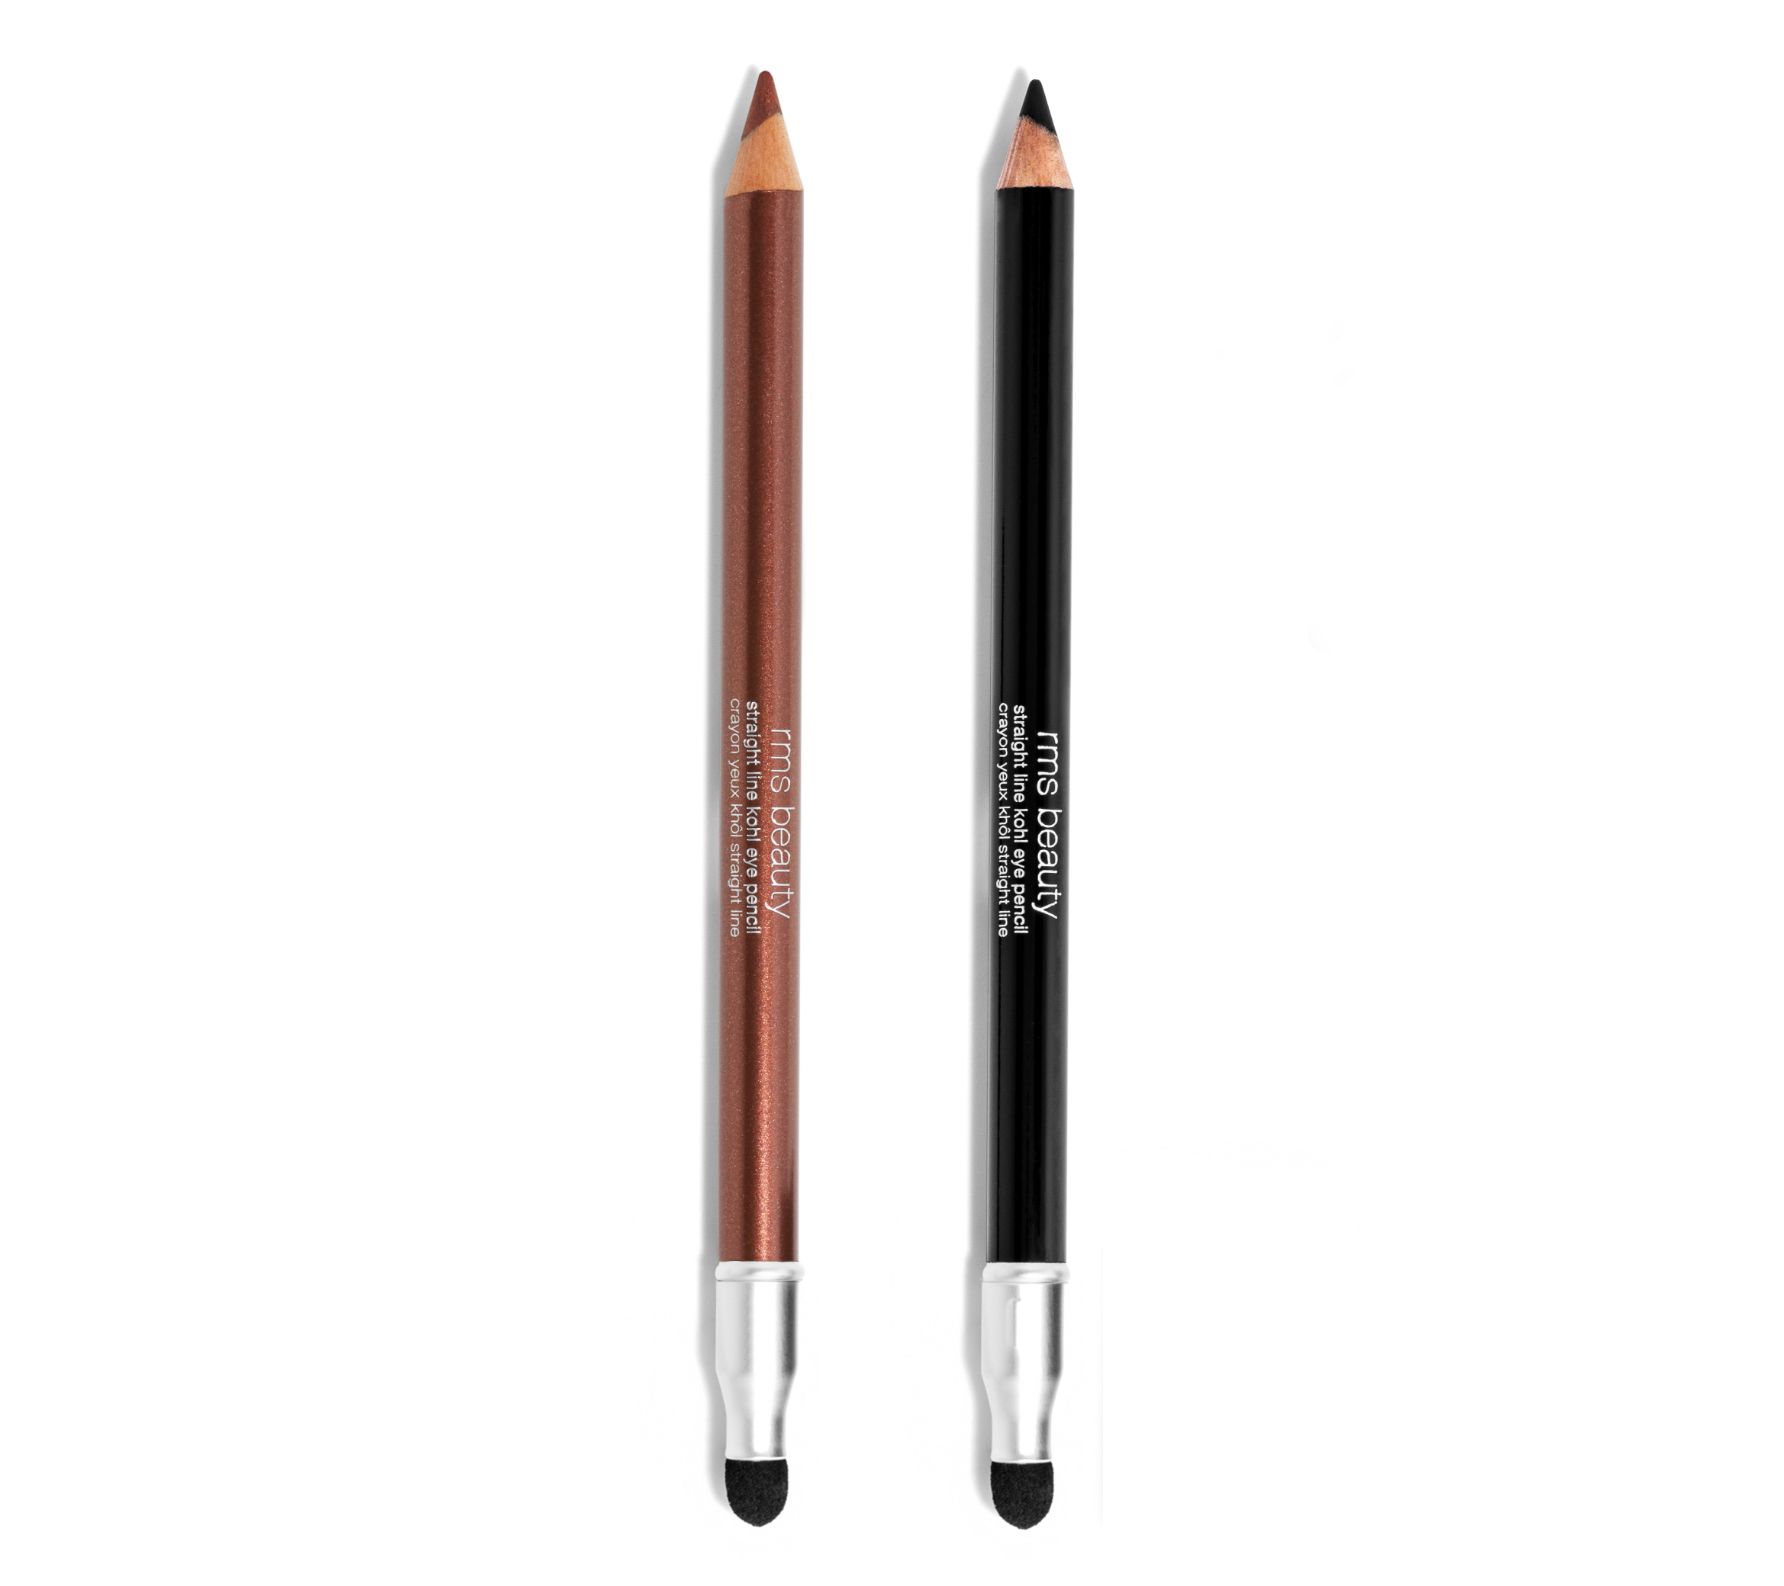 RMS Beauty Straight Line Kohl Black Eye Pencil